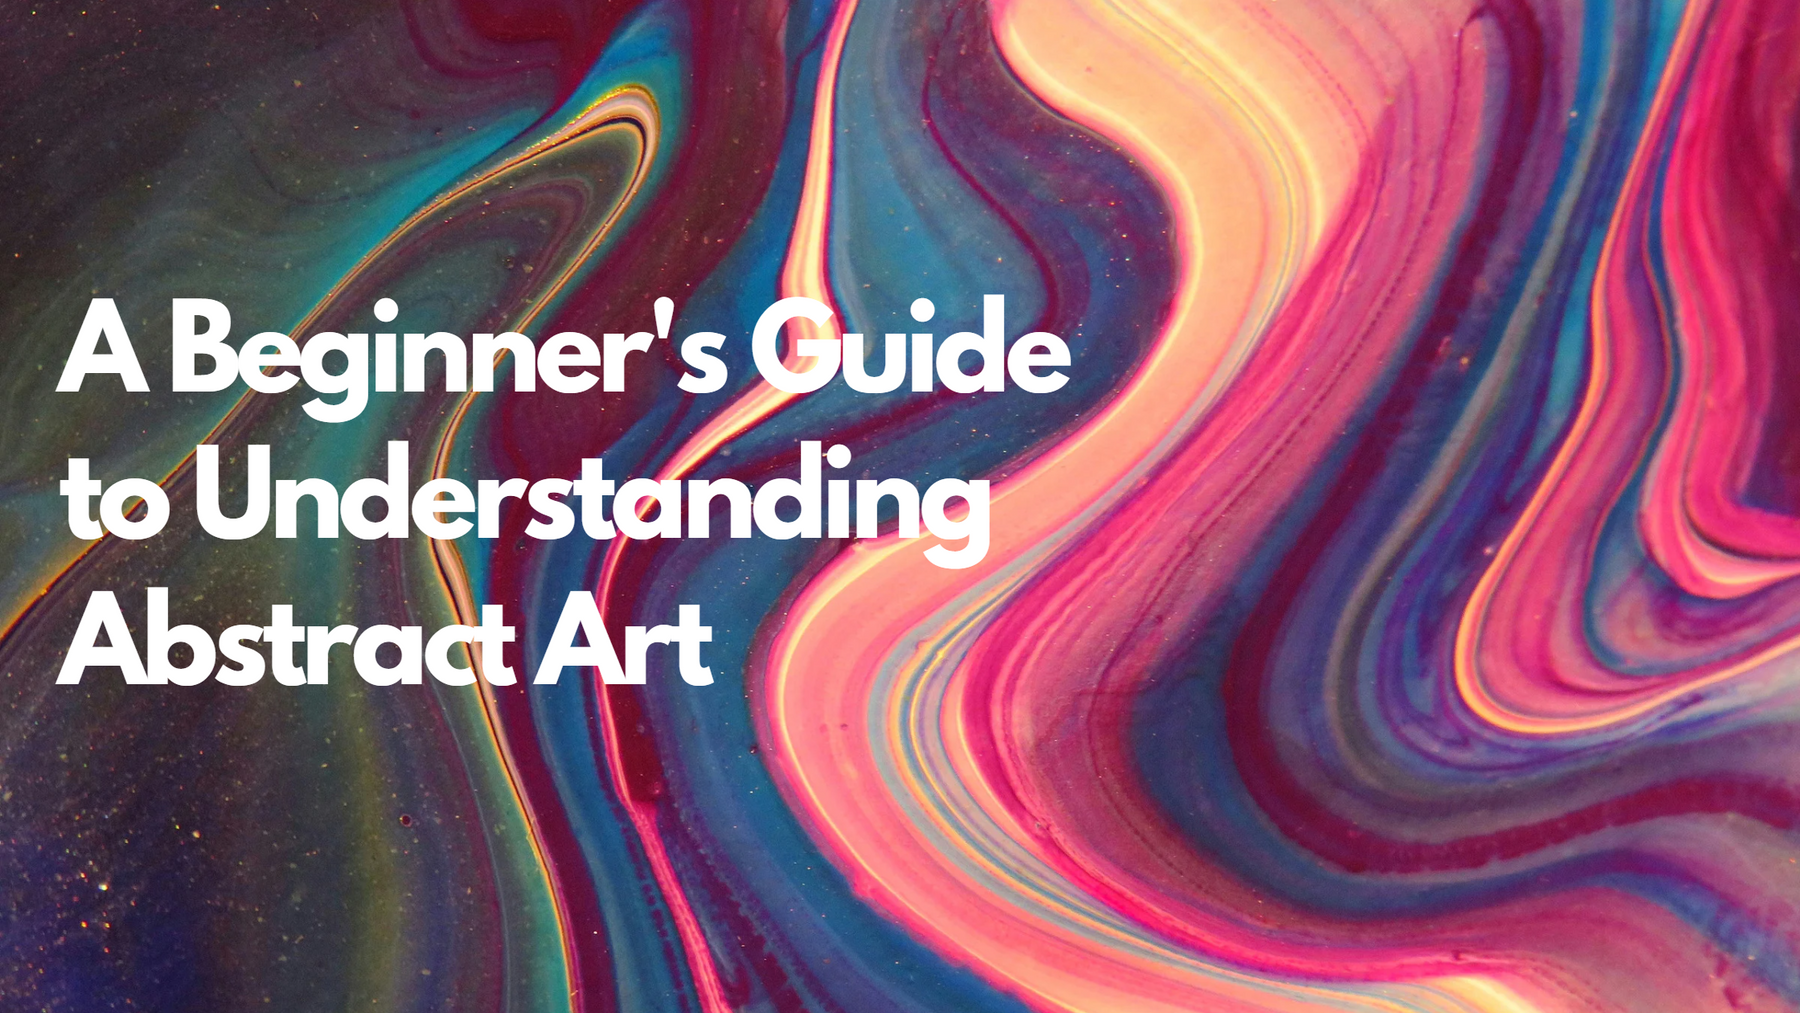 A Beginner's Guide to Understanding Abstract Art